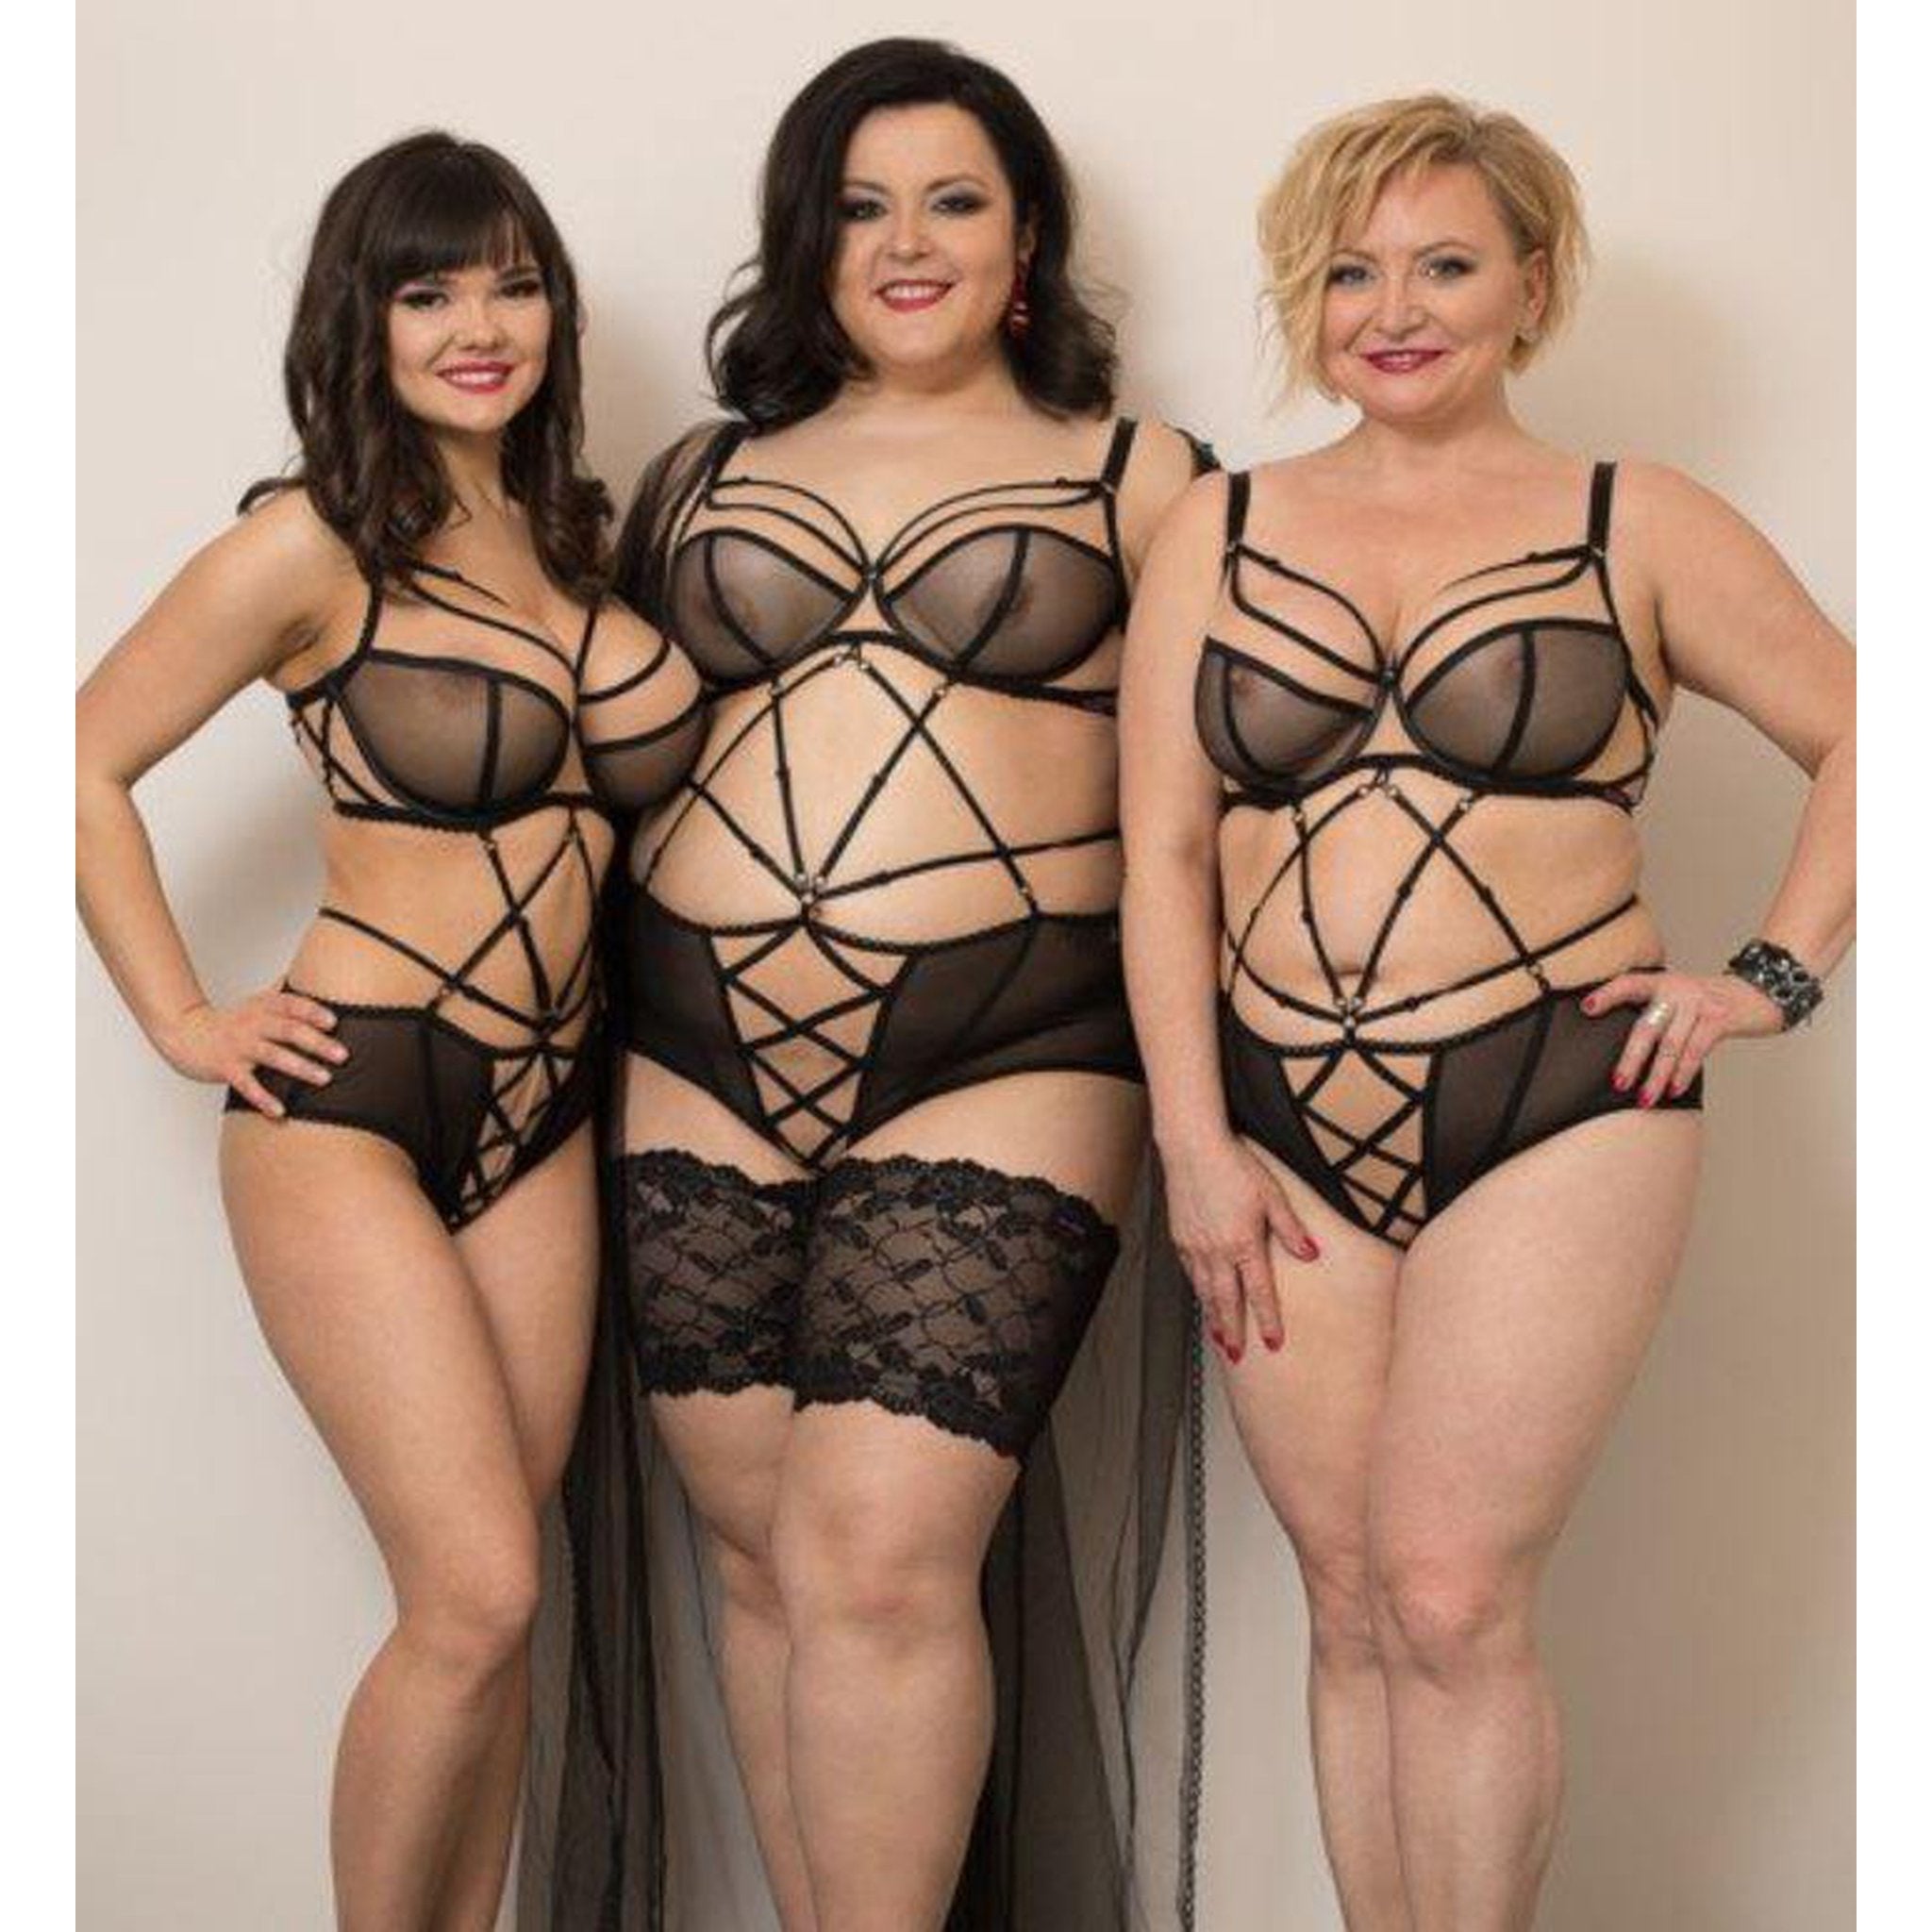 Ewa Michalak SIECI Strappy Bra and Panty Set featuring diverse body types